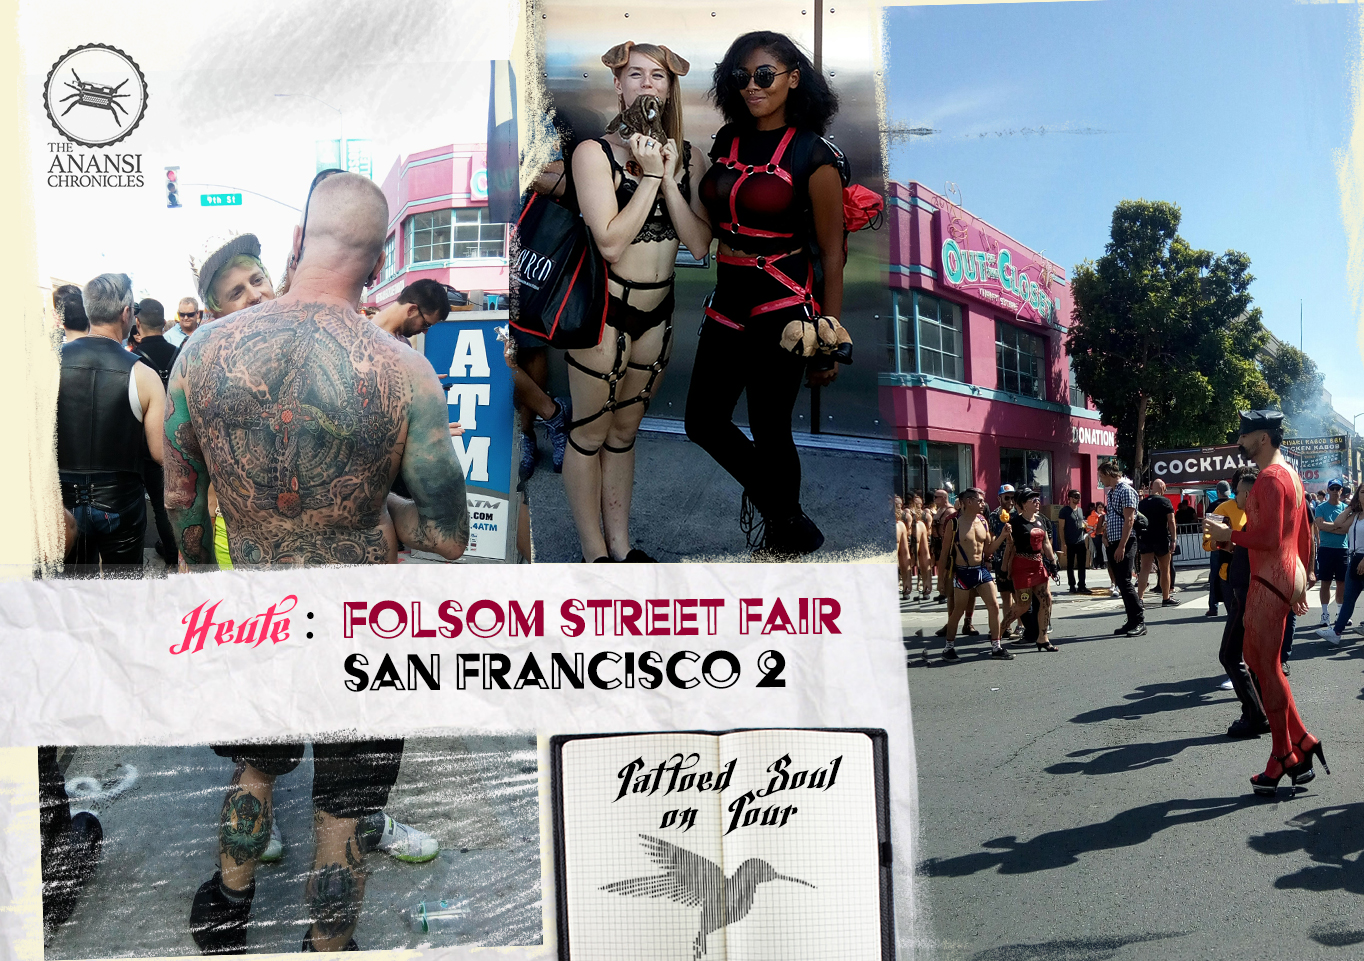 Tattoed Soul on tour: Folsom Street Fair 2018 – San Francisco 2